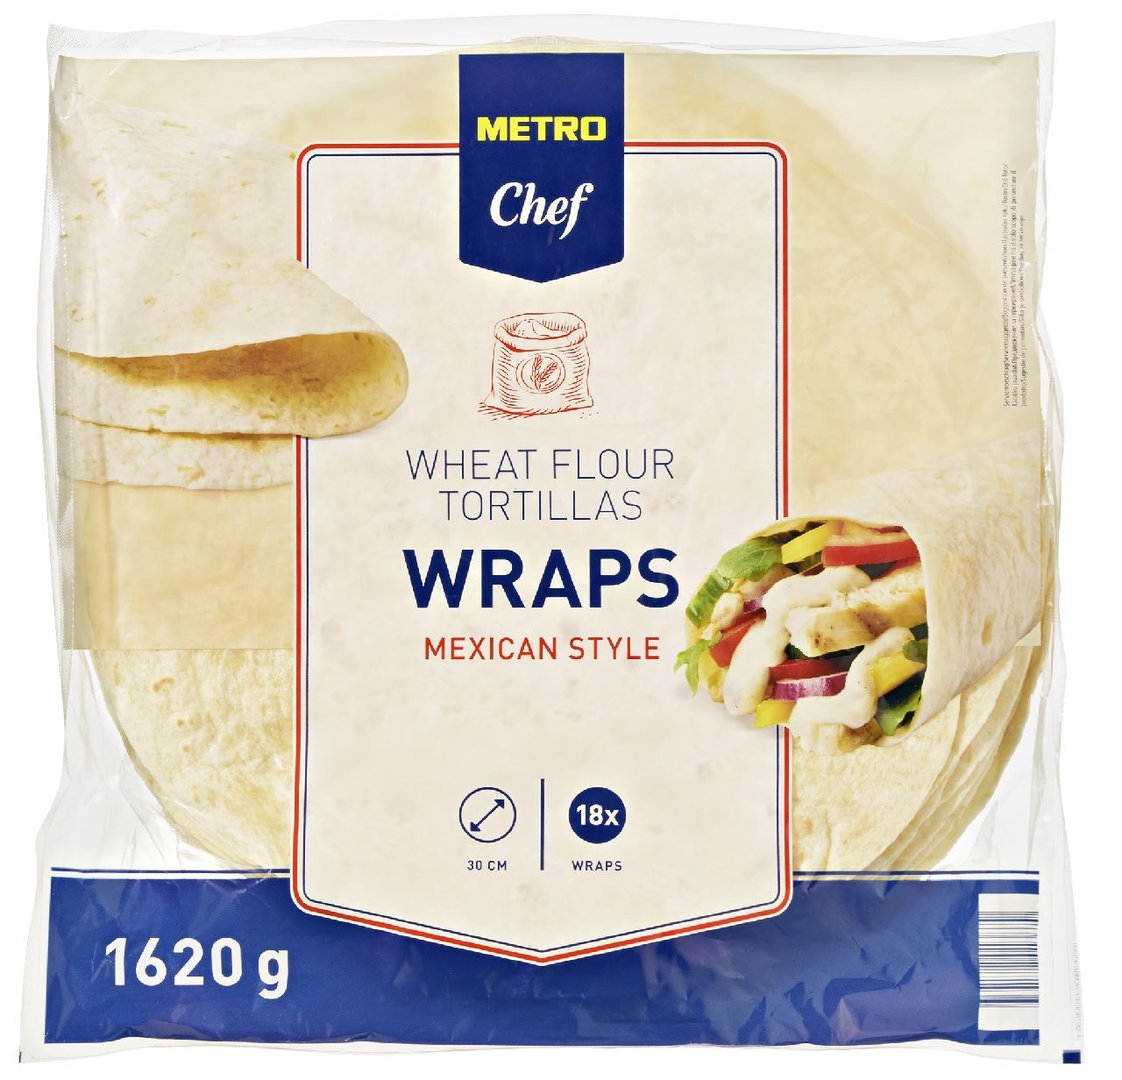 METRO Chef - Weizen Wraps Mexican Style Ø 30 cm 18 Stück - 6 x 1,62 kg Karton